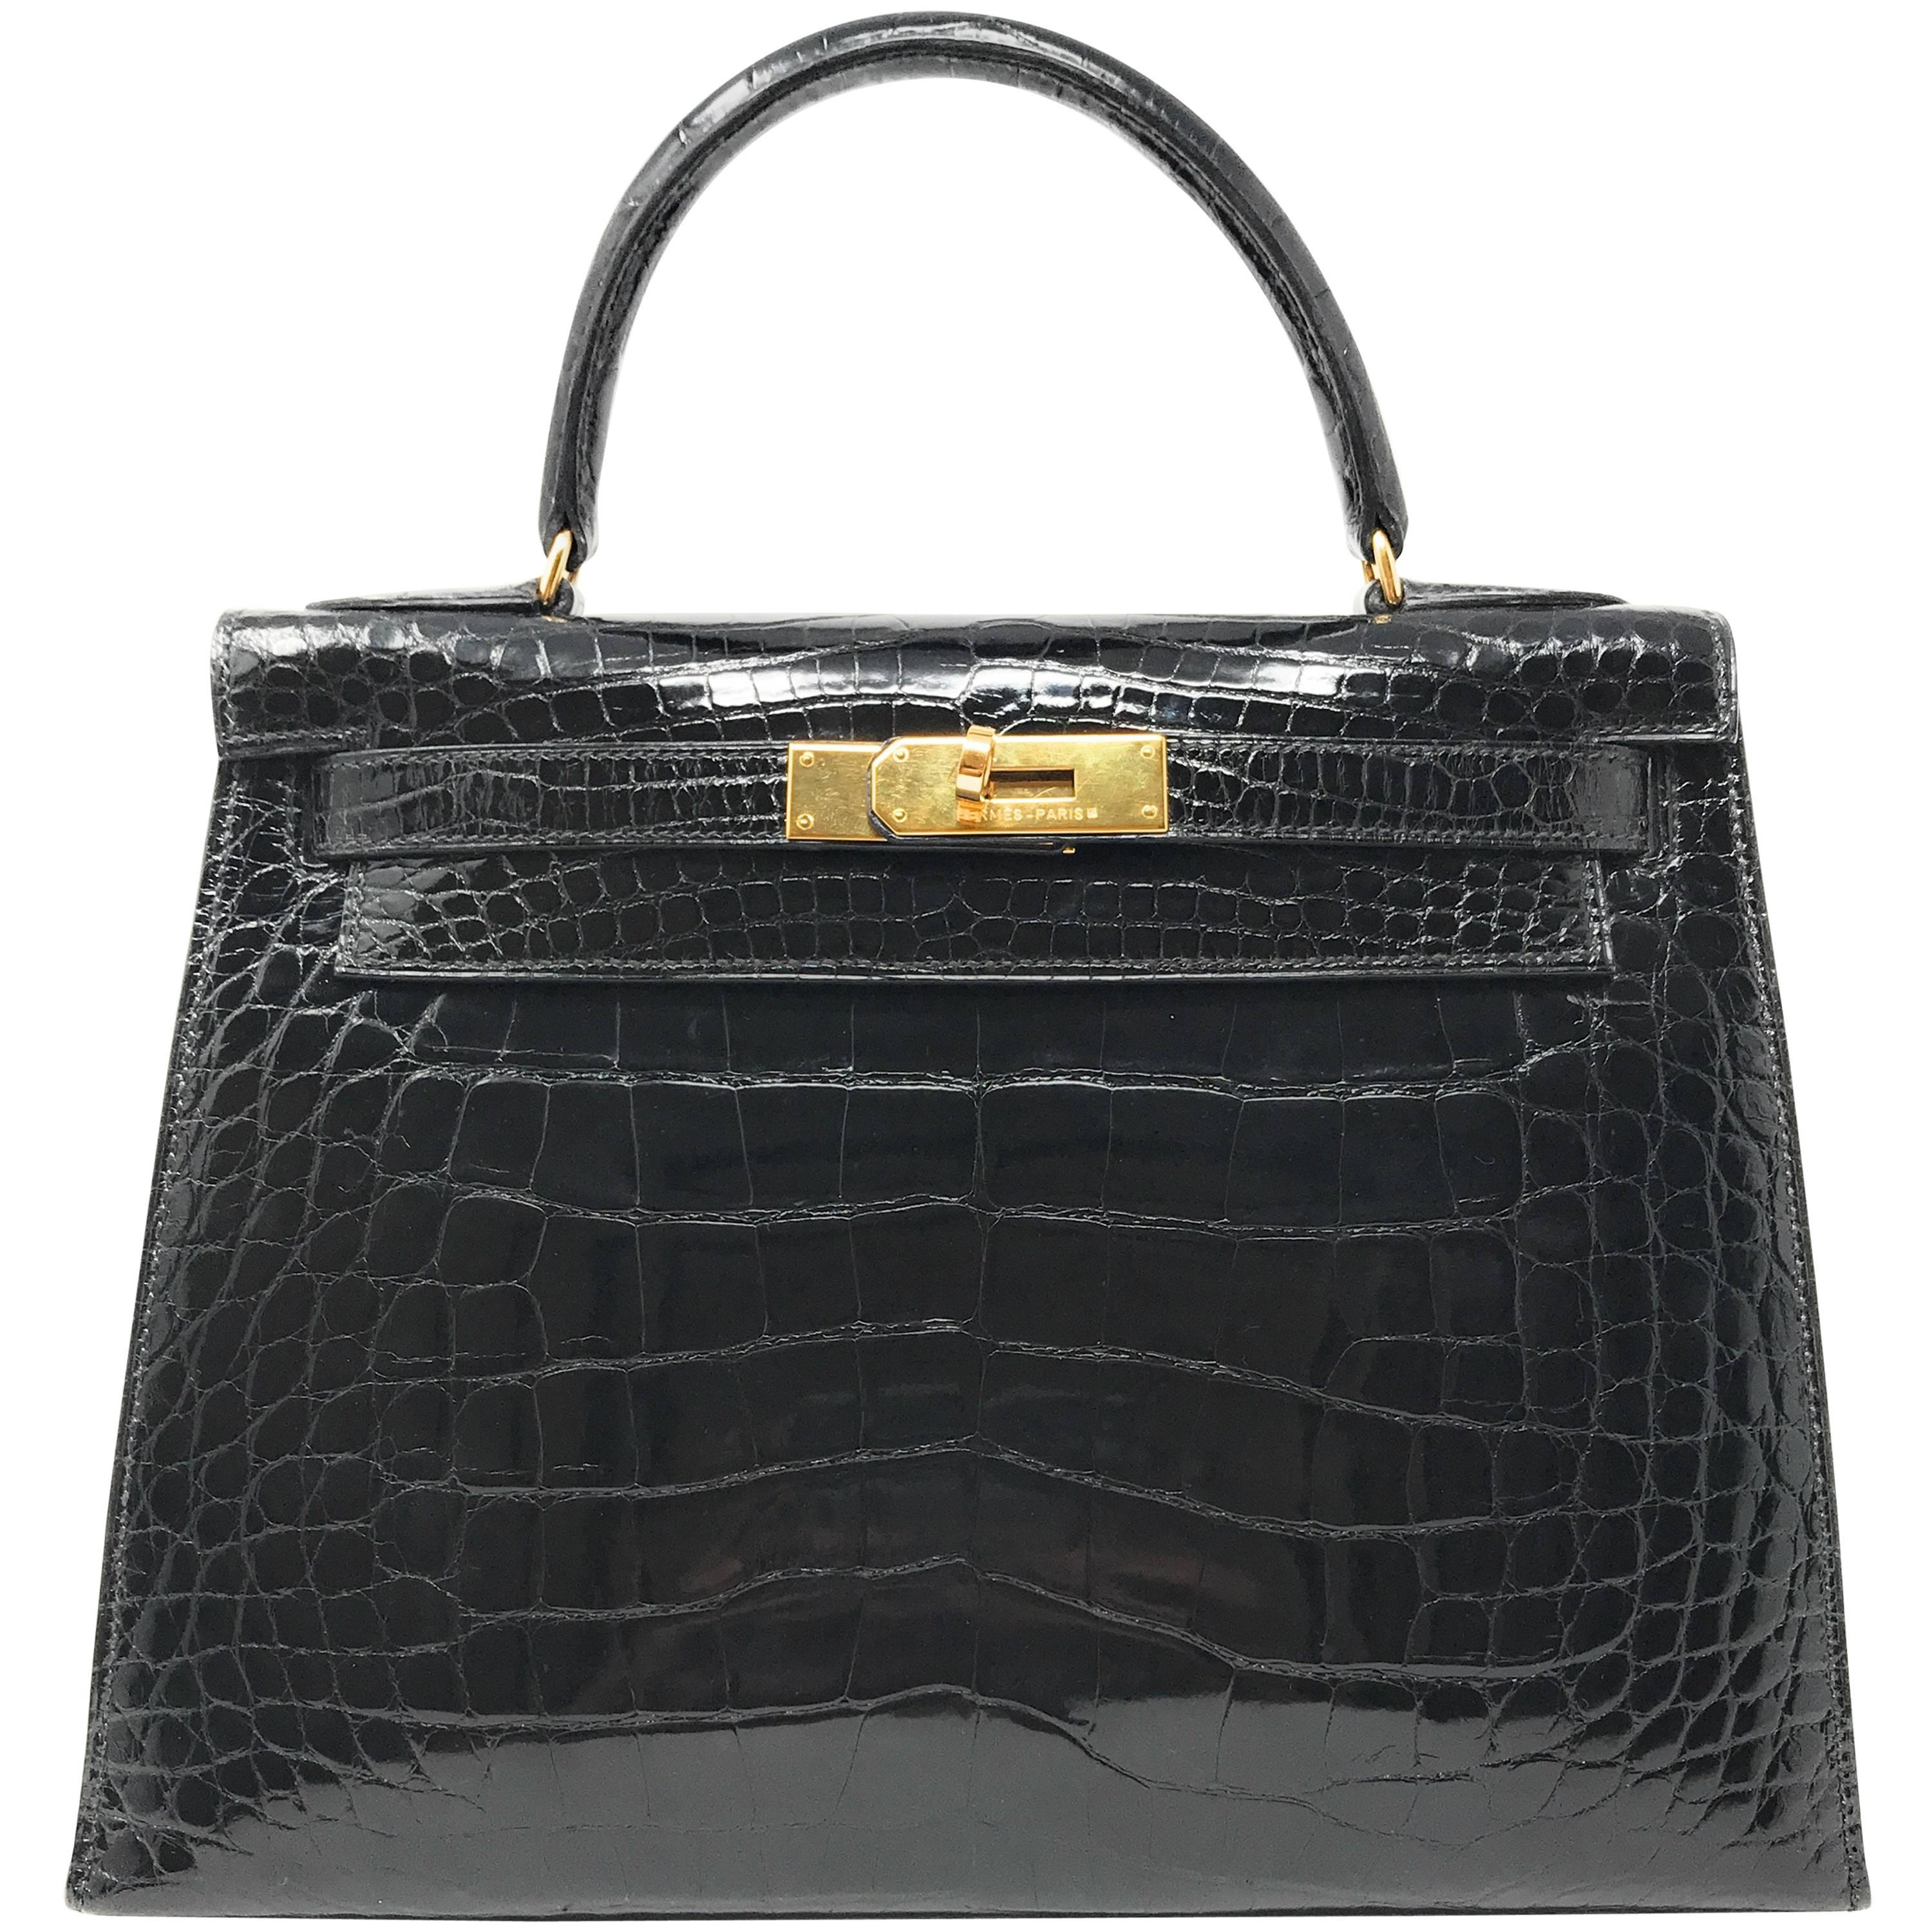 Hermes Kelly 28cm Black Shiny Alligator Bag